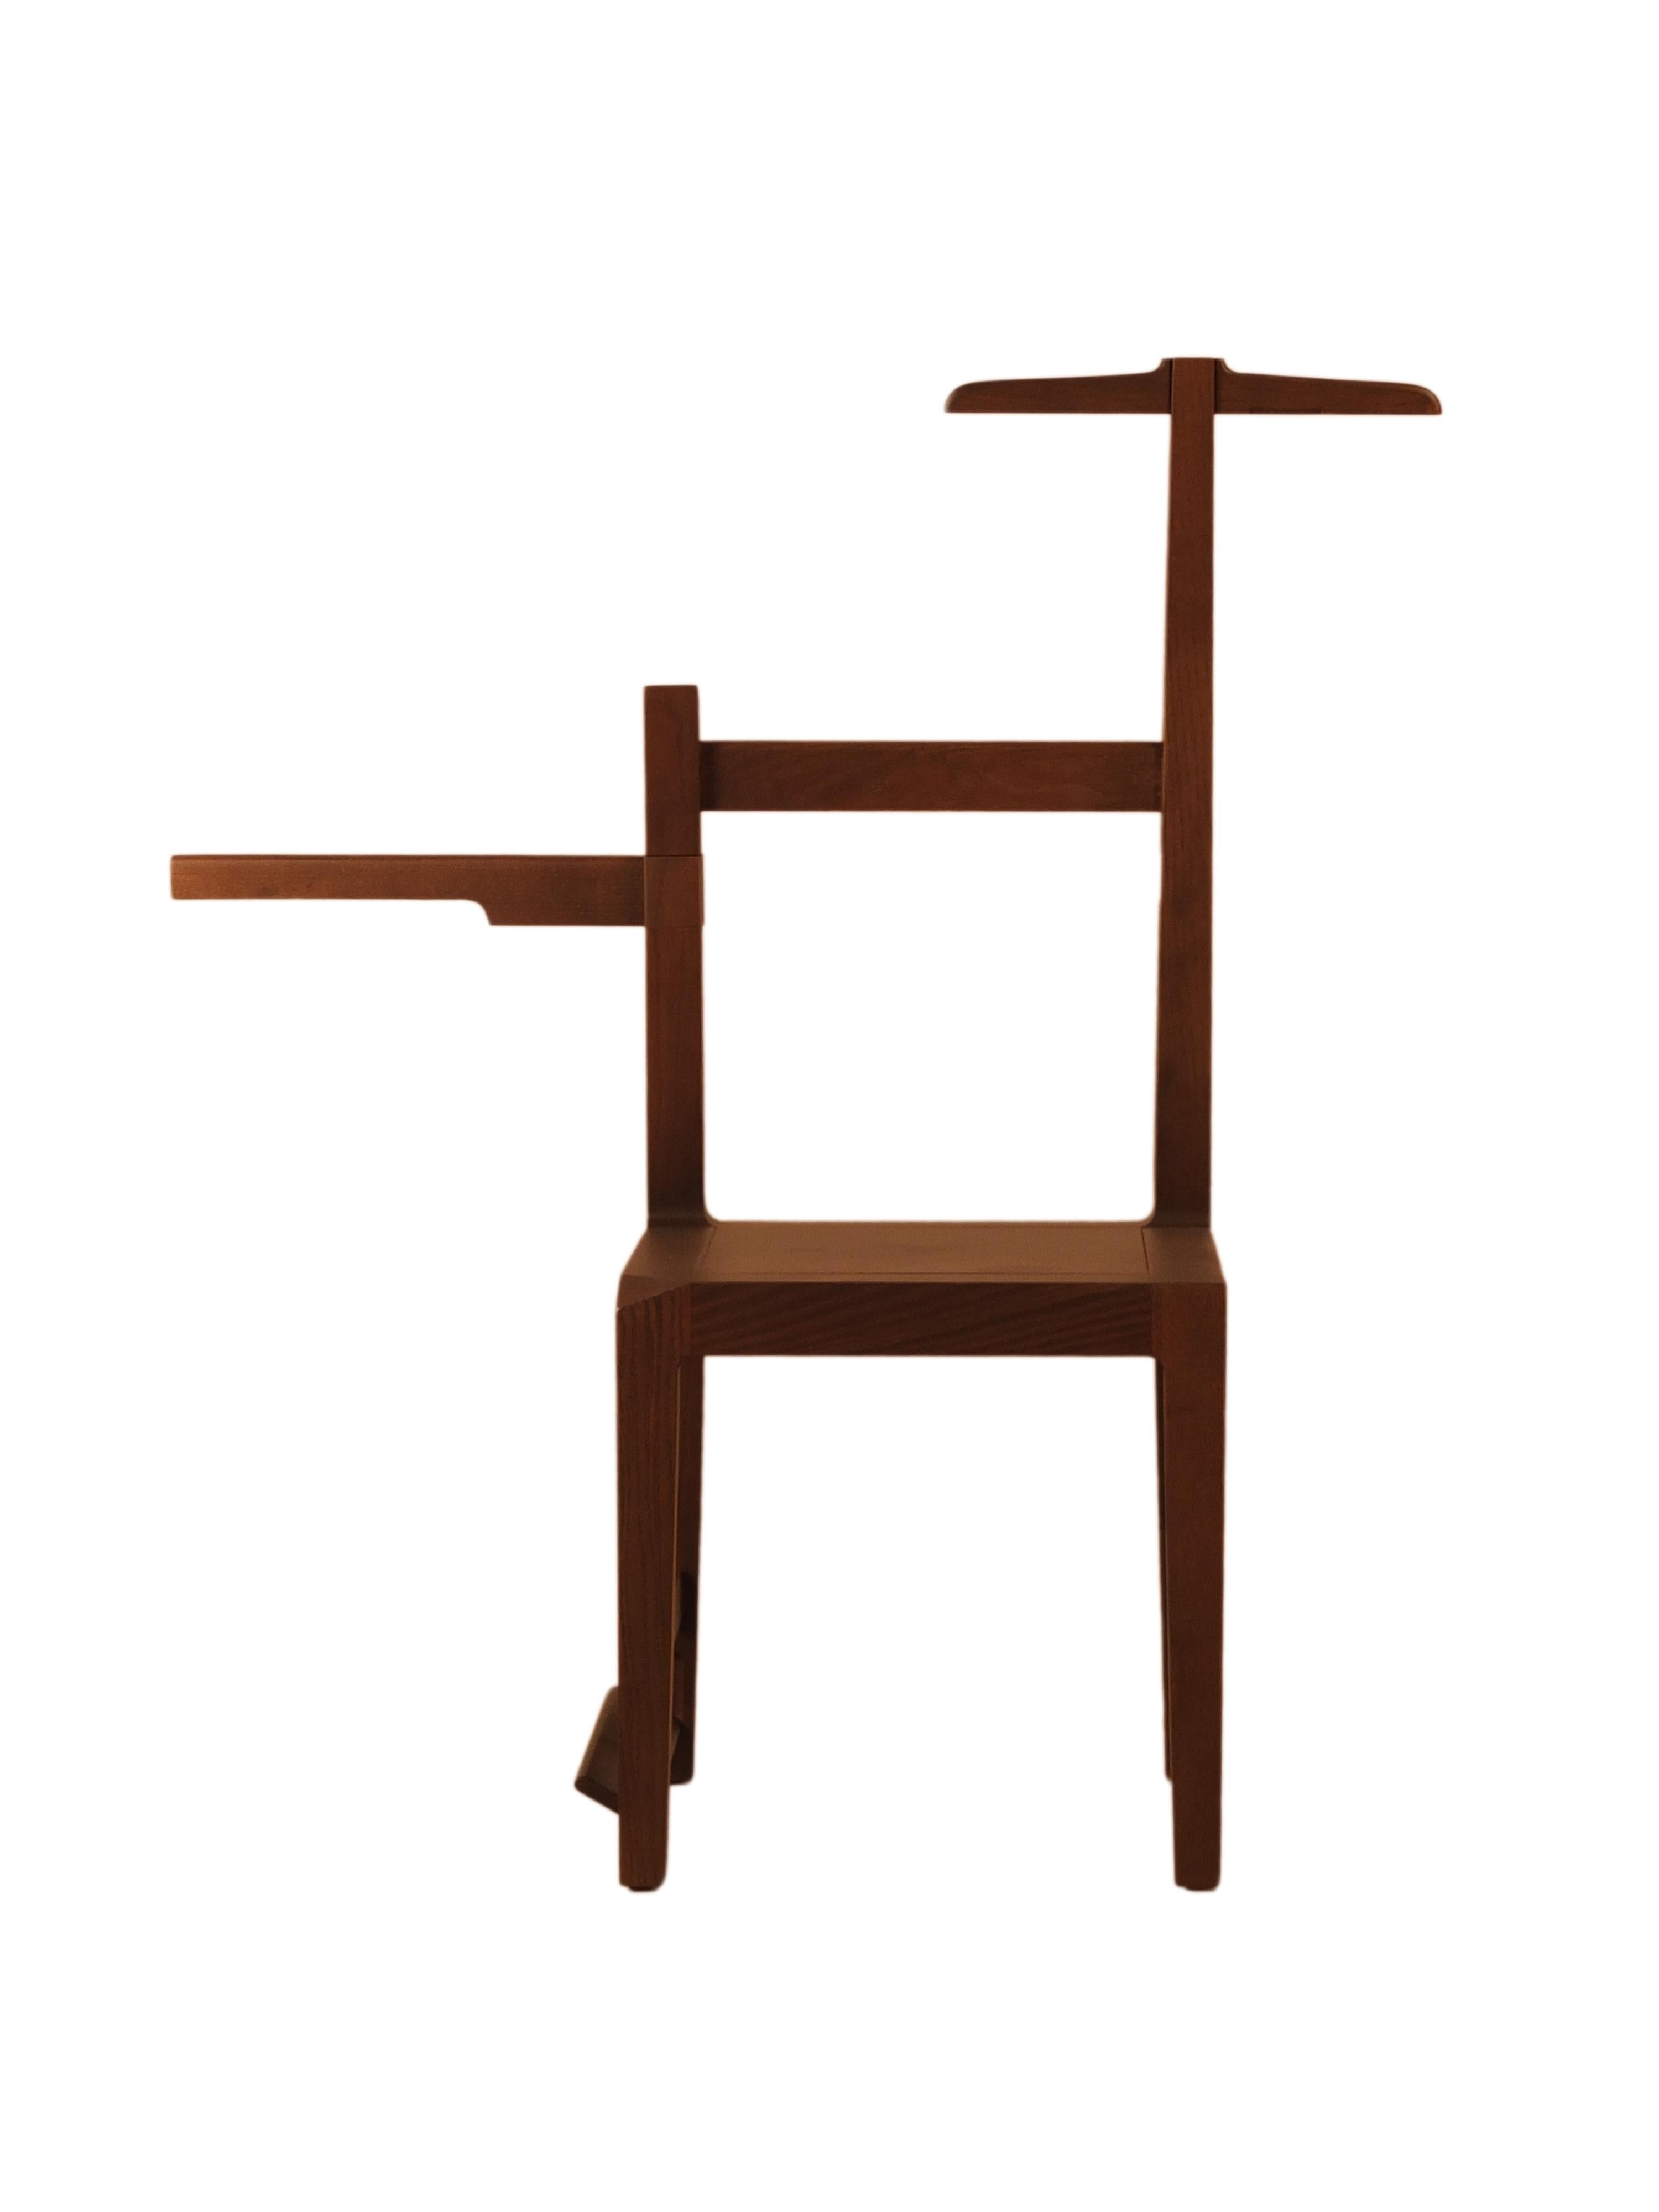 Italian Metamorfosi Valet Chair by Morelato